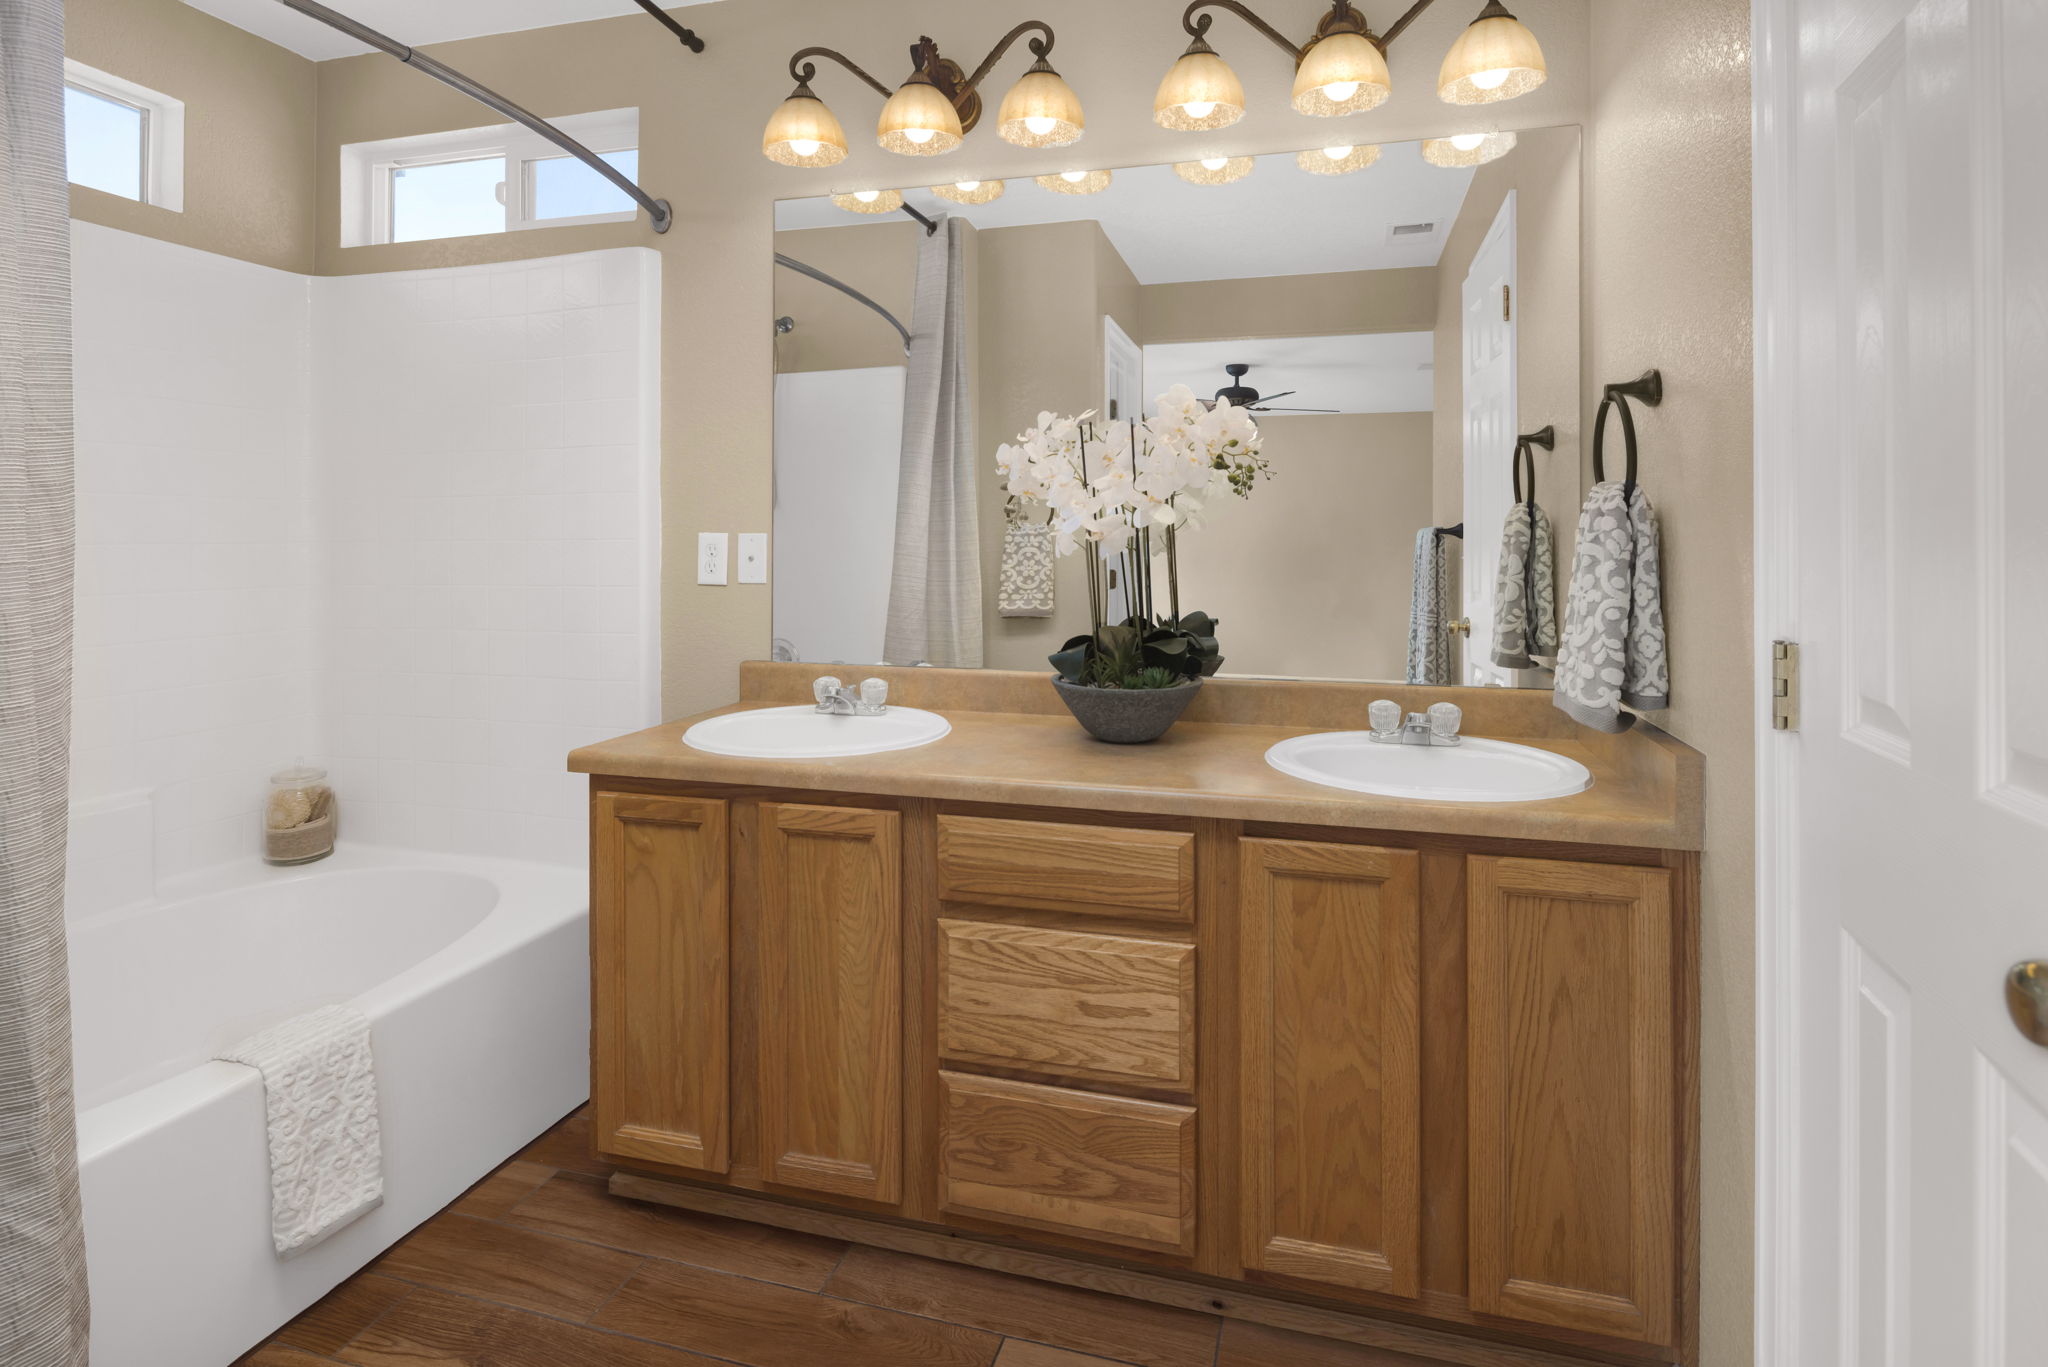 En-Suite Primary Bathroom Features Dual Sinks